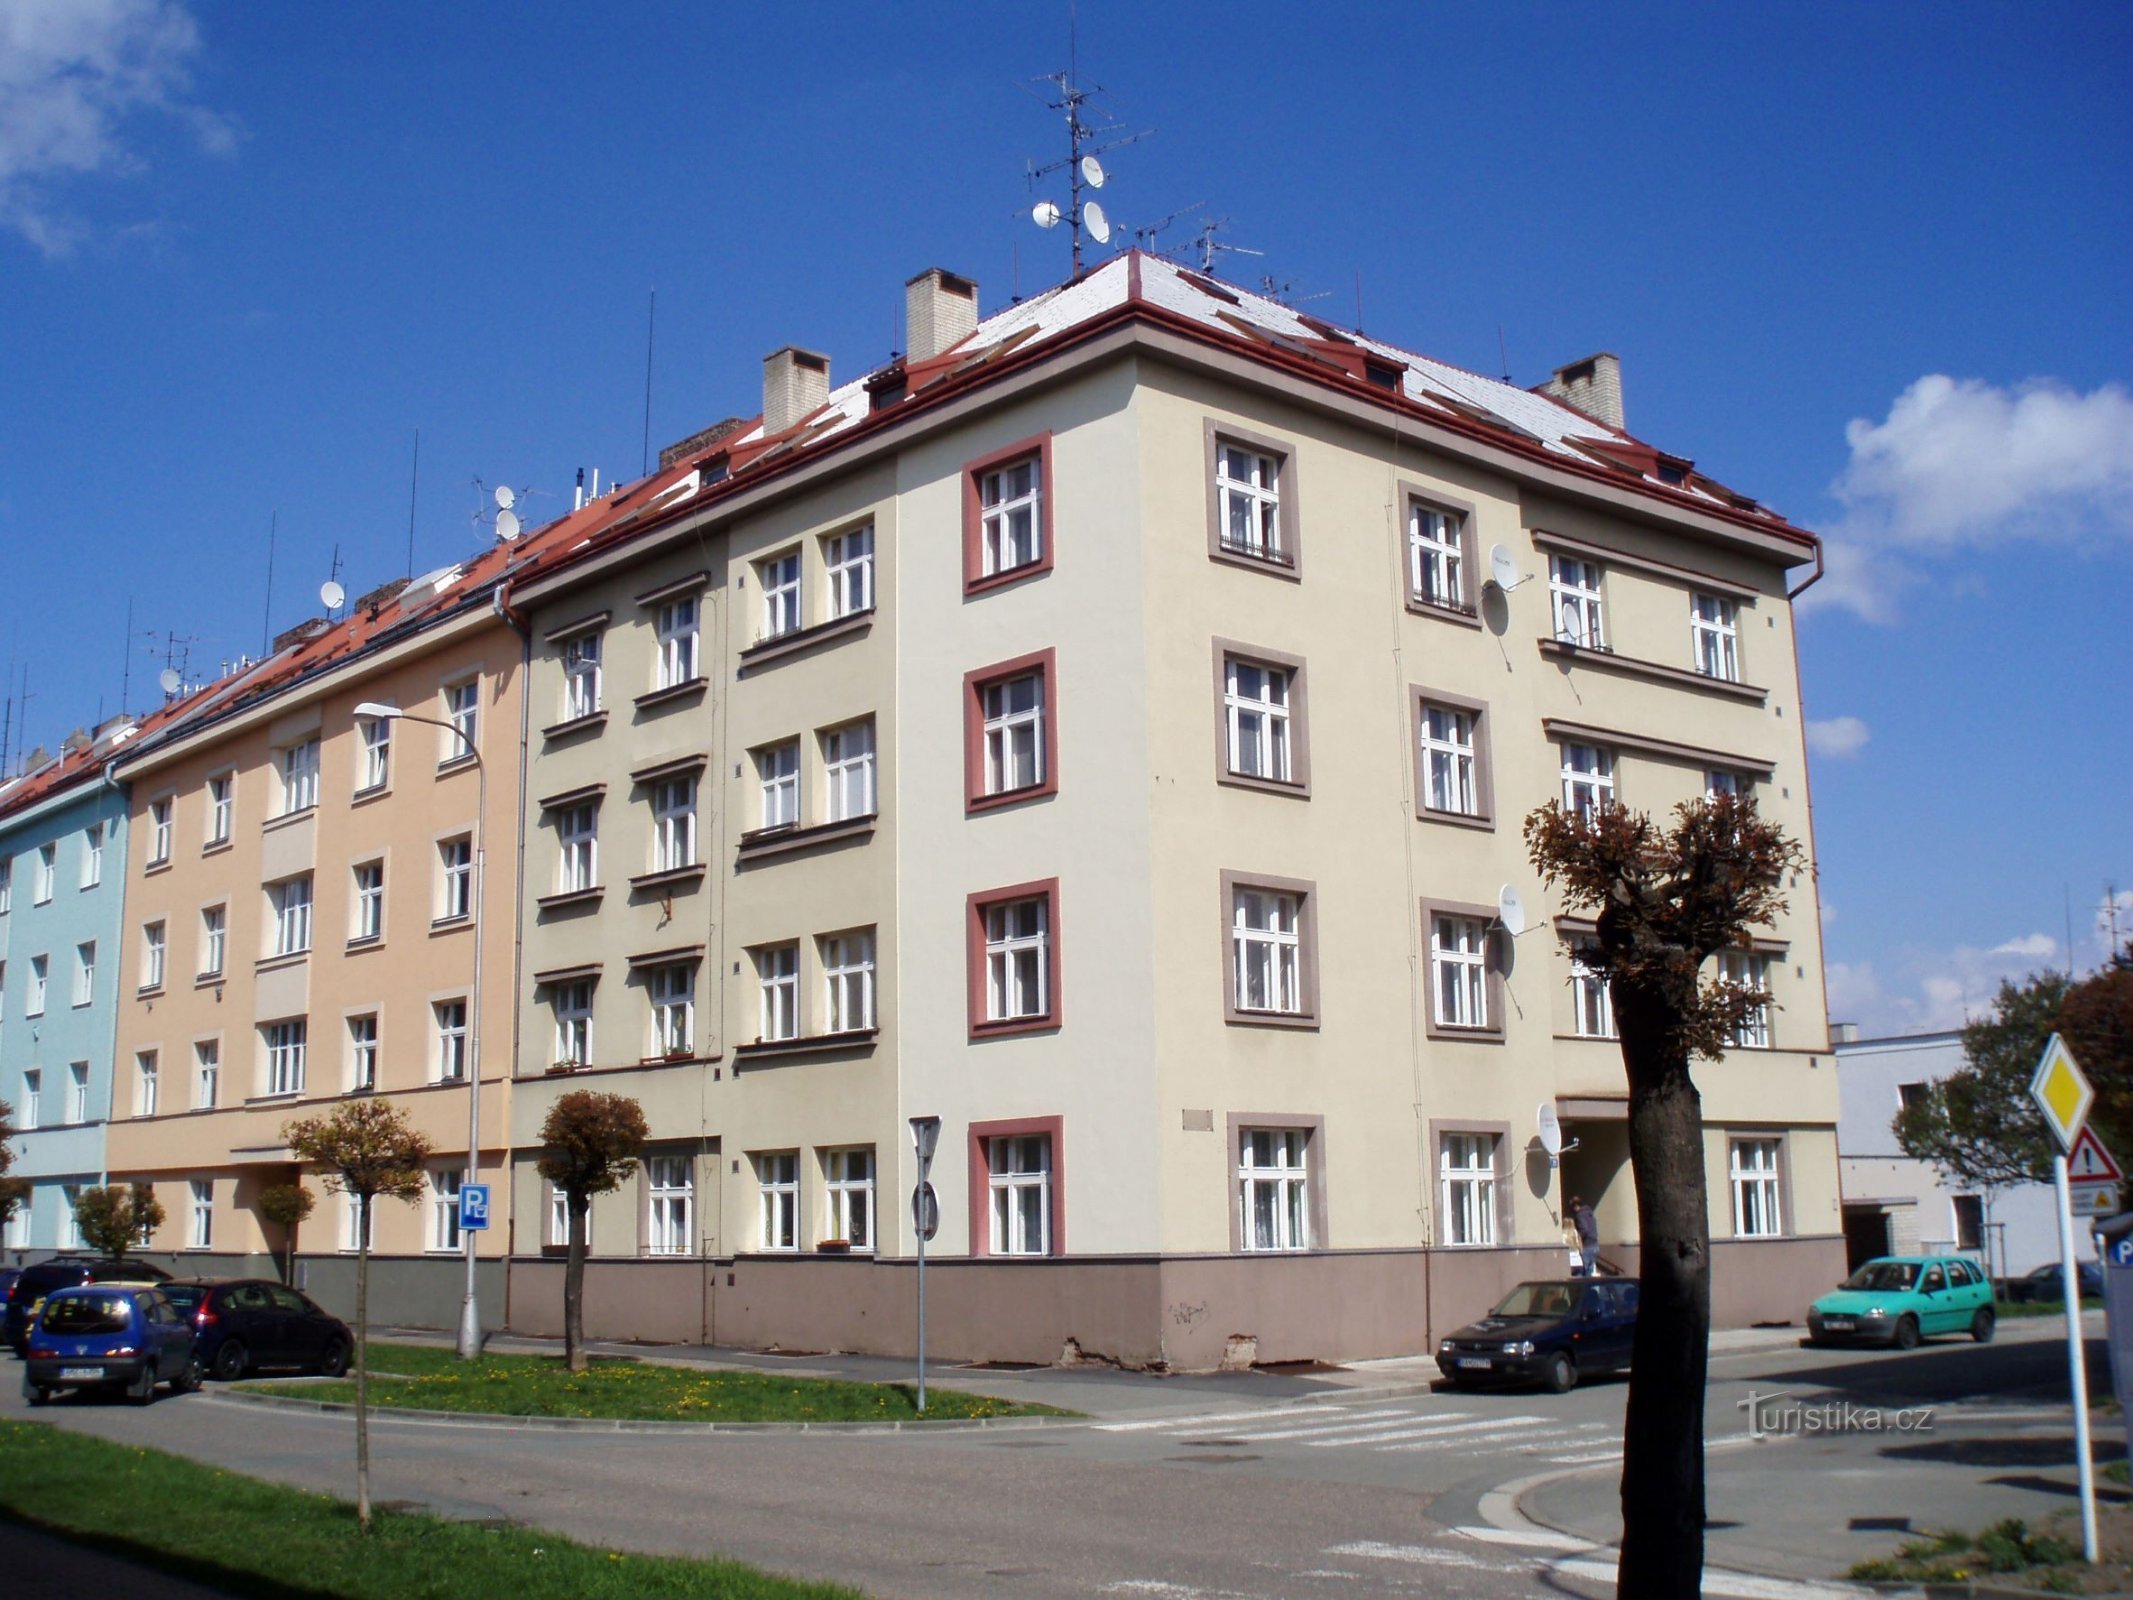 Albertova nro 826 (Hradec Králové, 21.4.2012. huhtikuuta XNUMX)